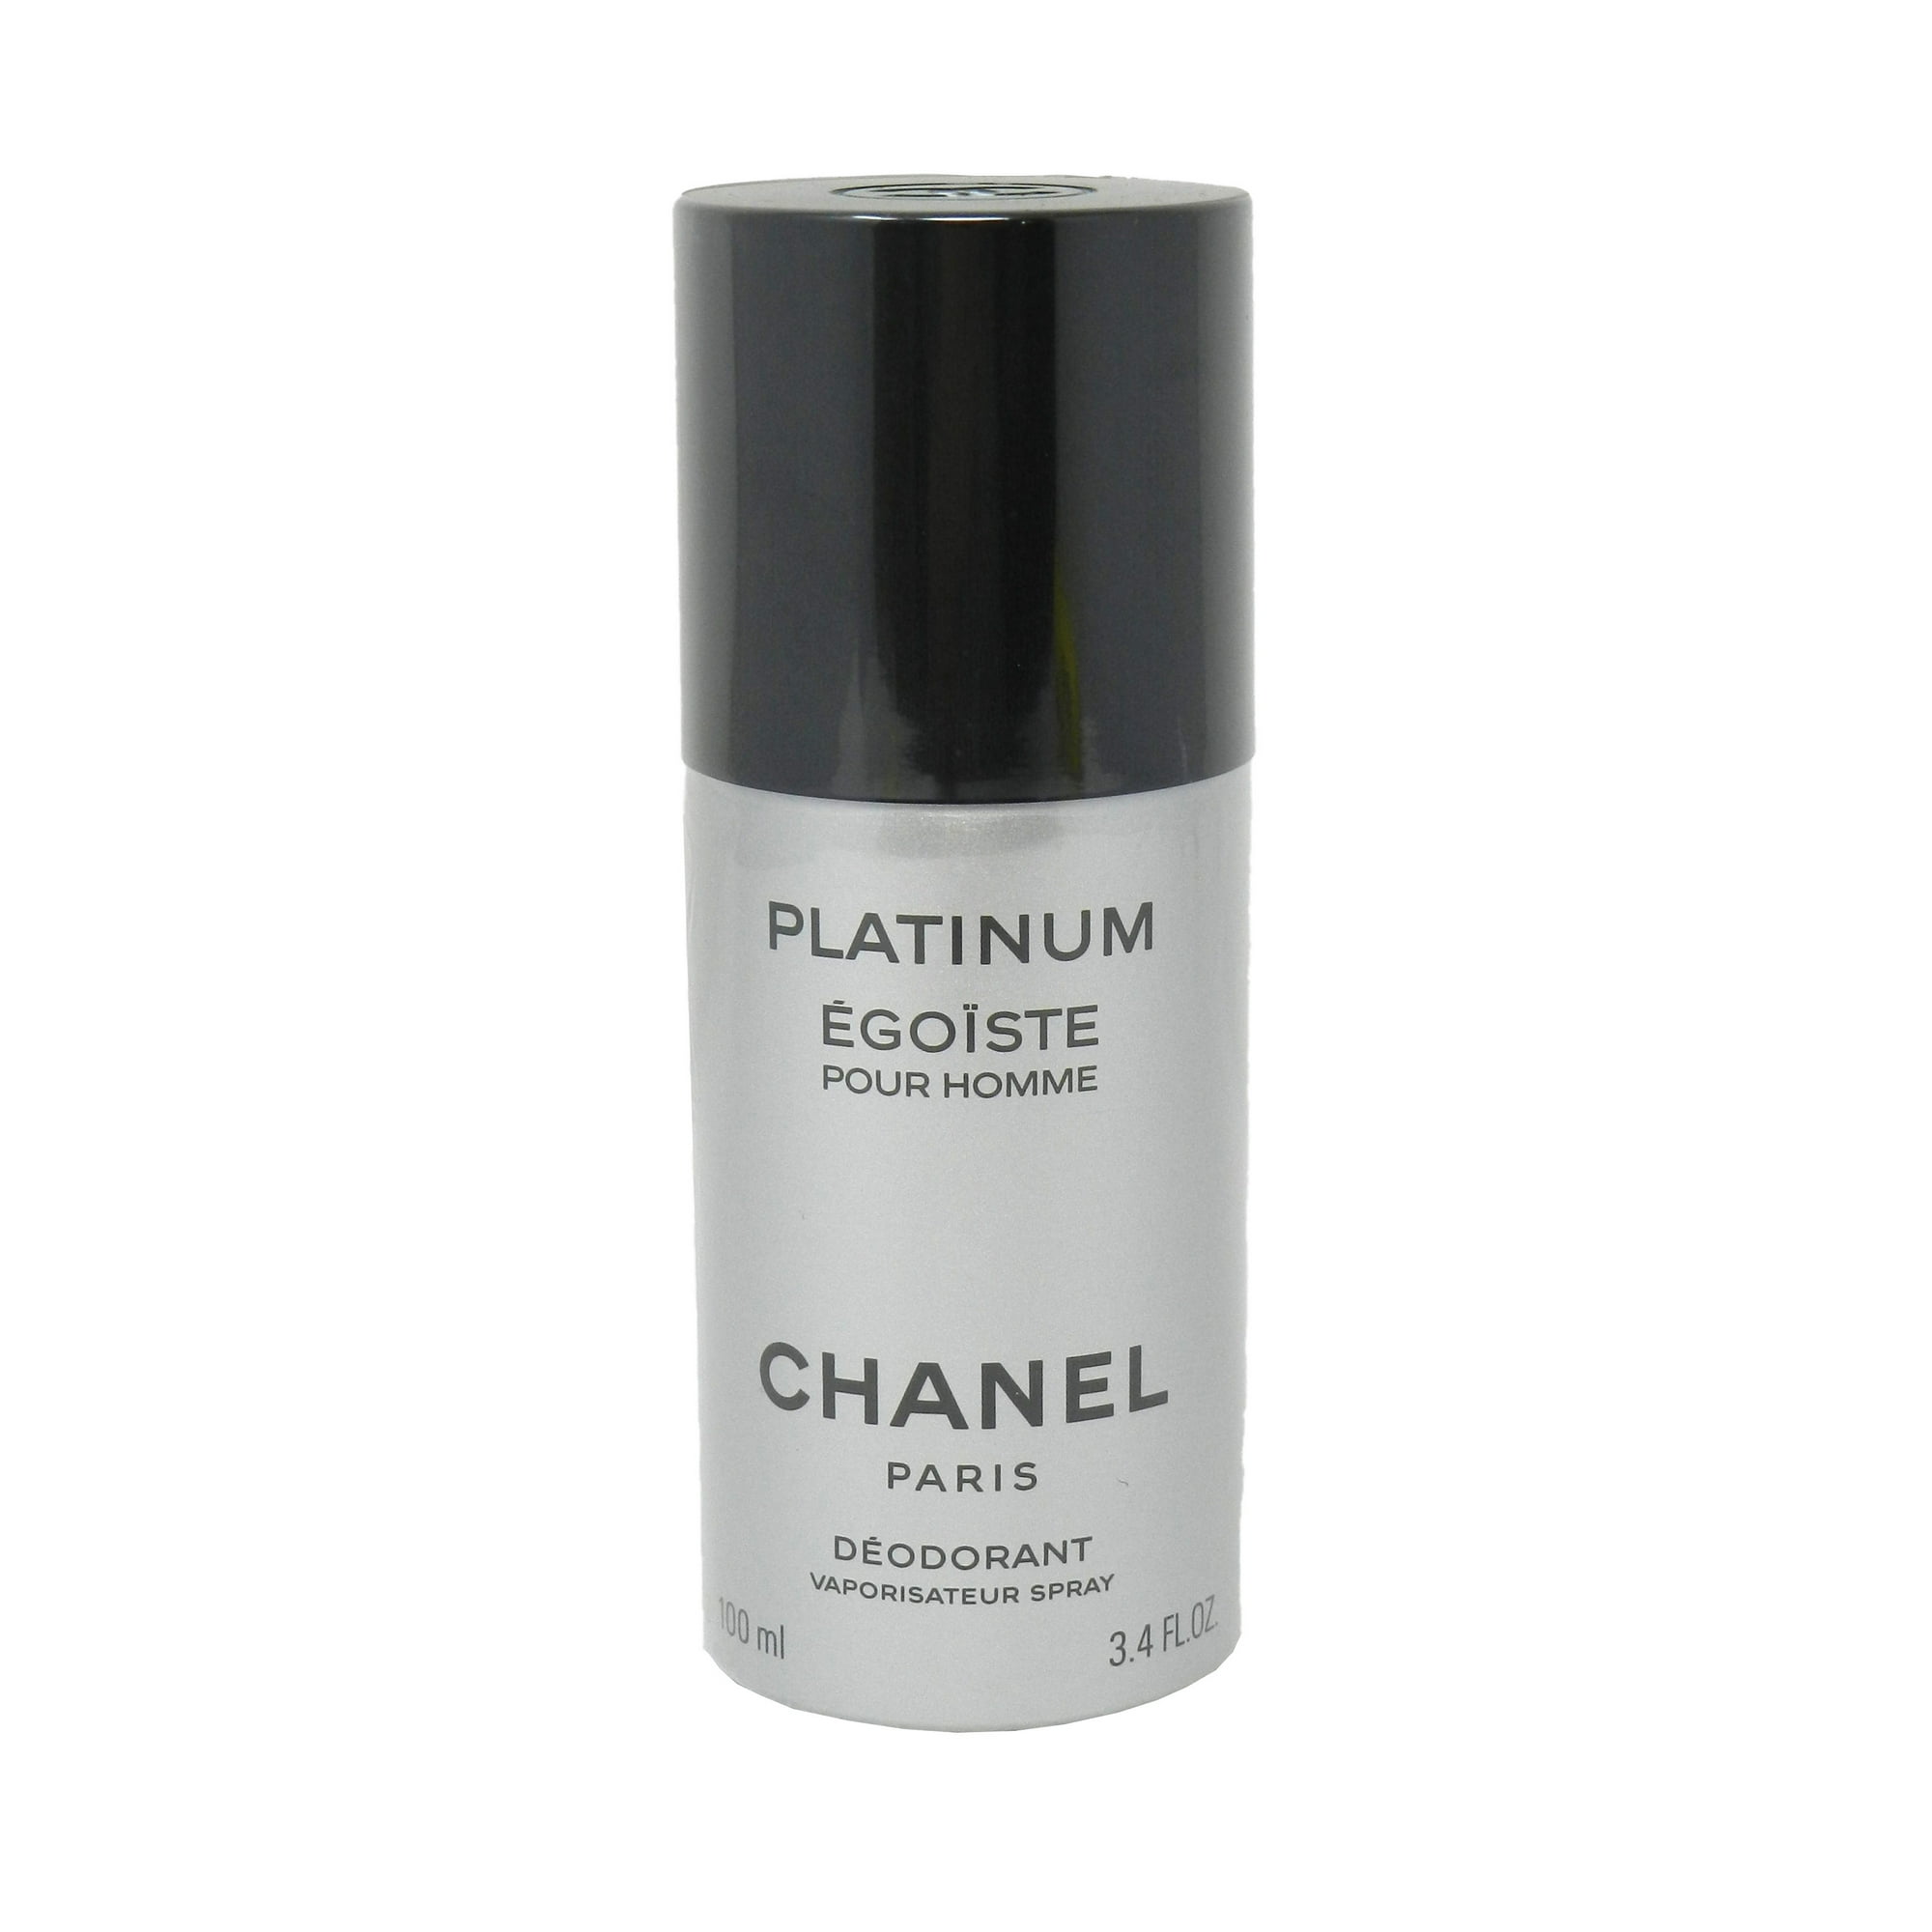 Chanel Platinum Egoiste Pour Homme Deodorant Spray 3.4 Ounces